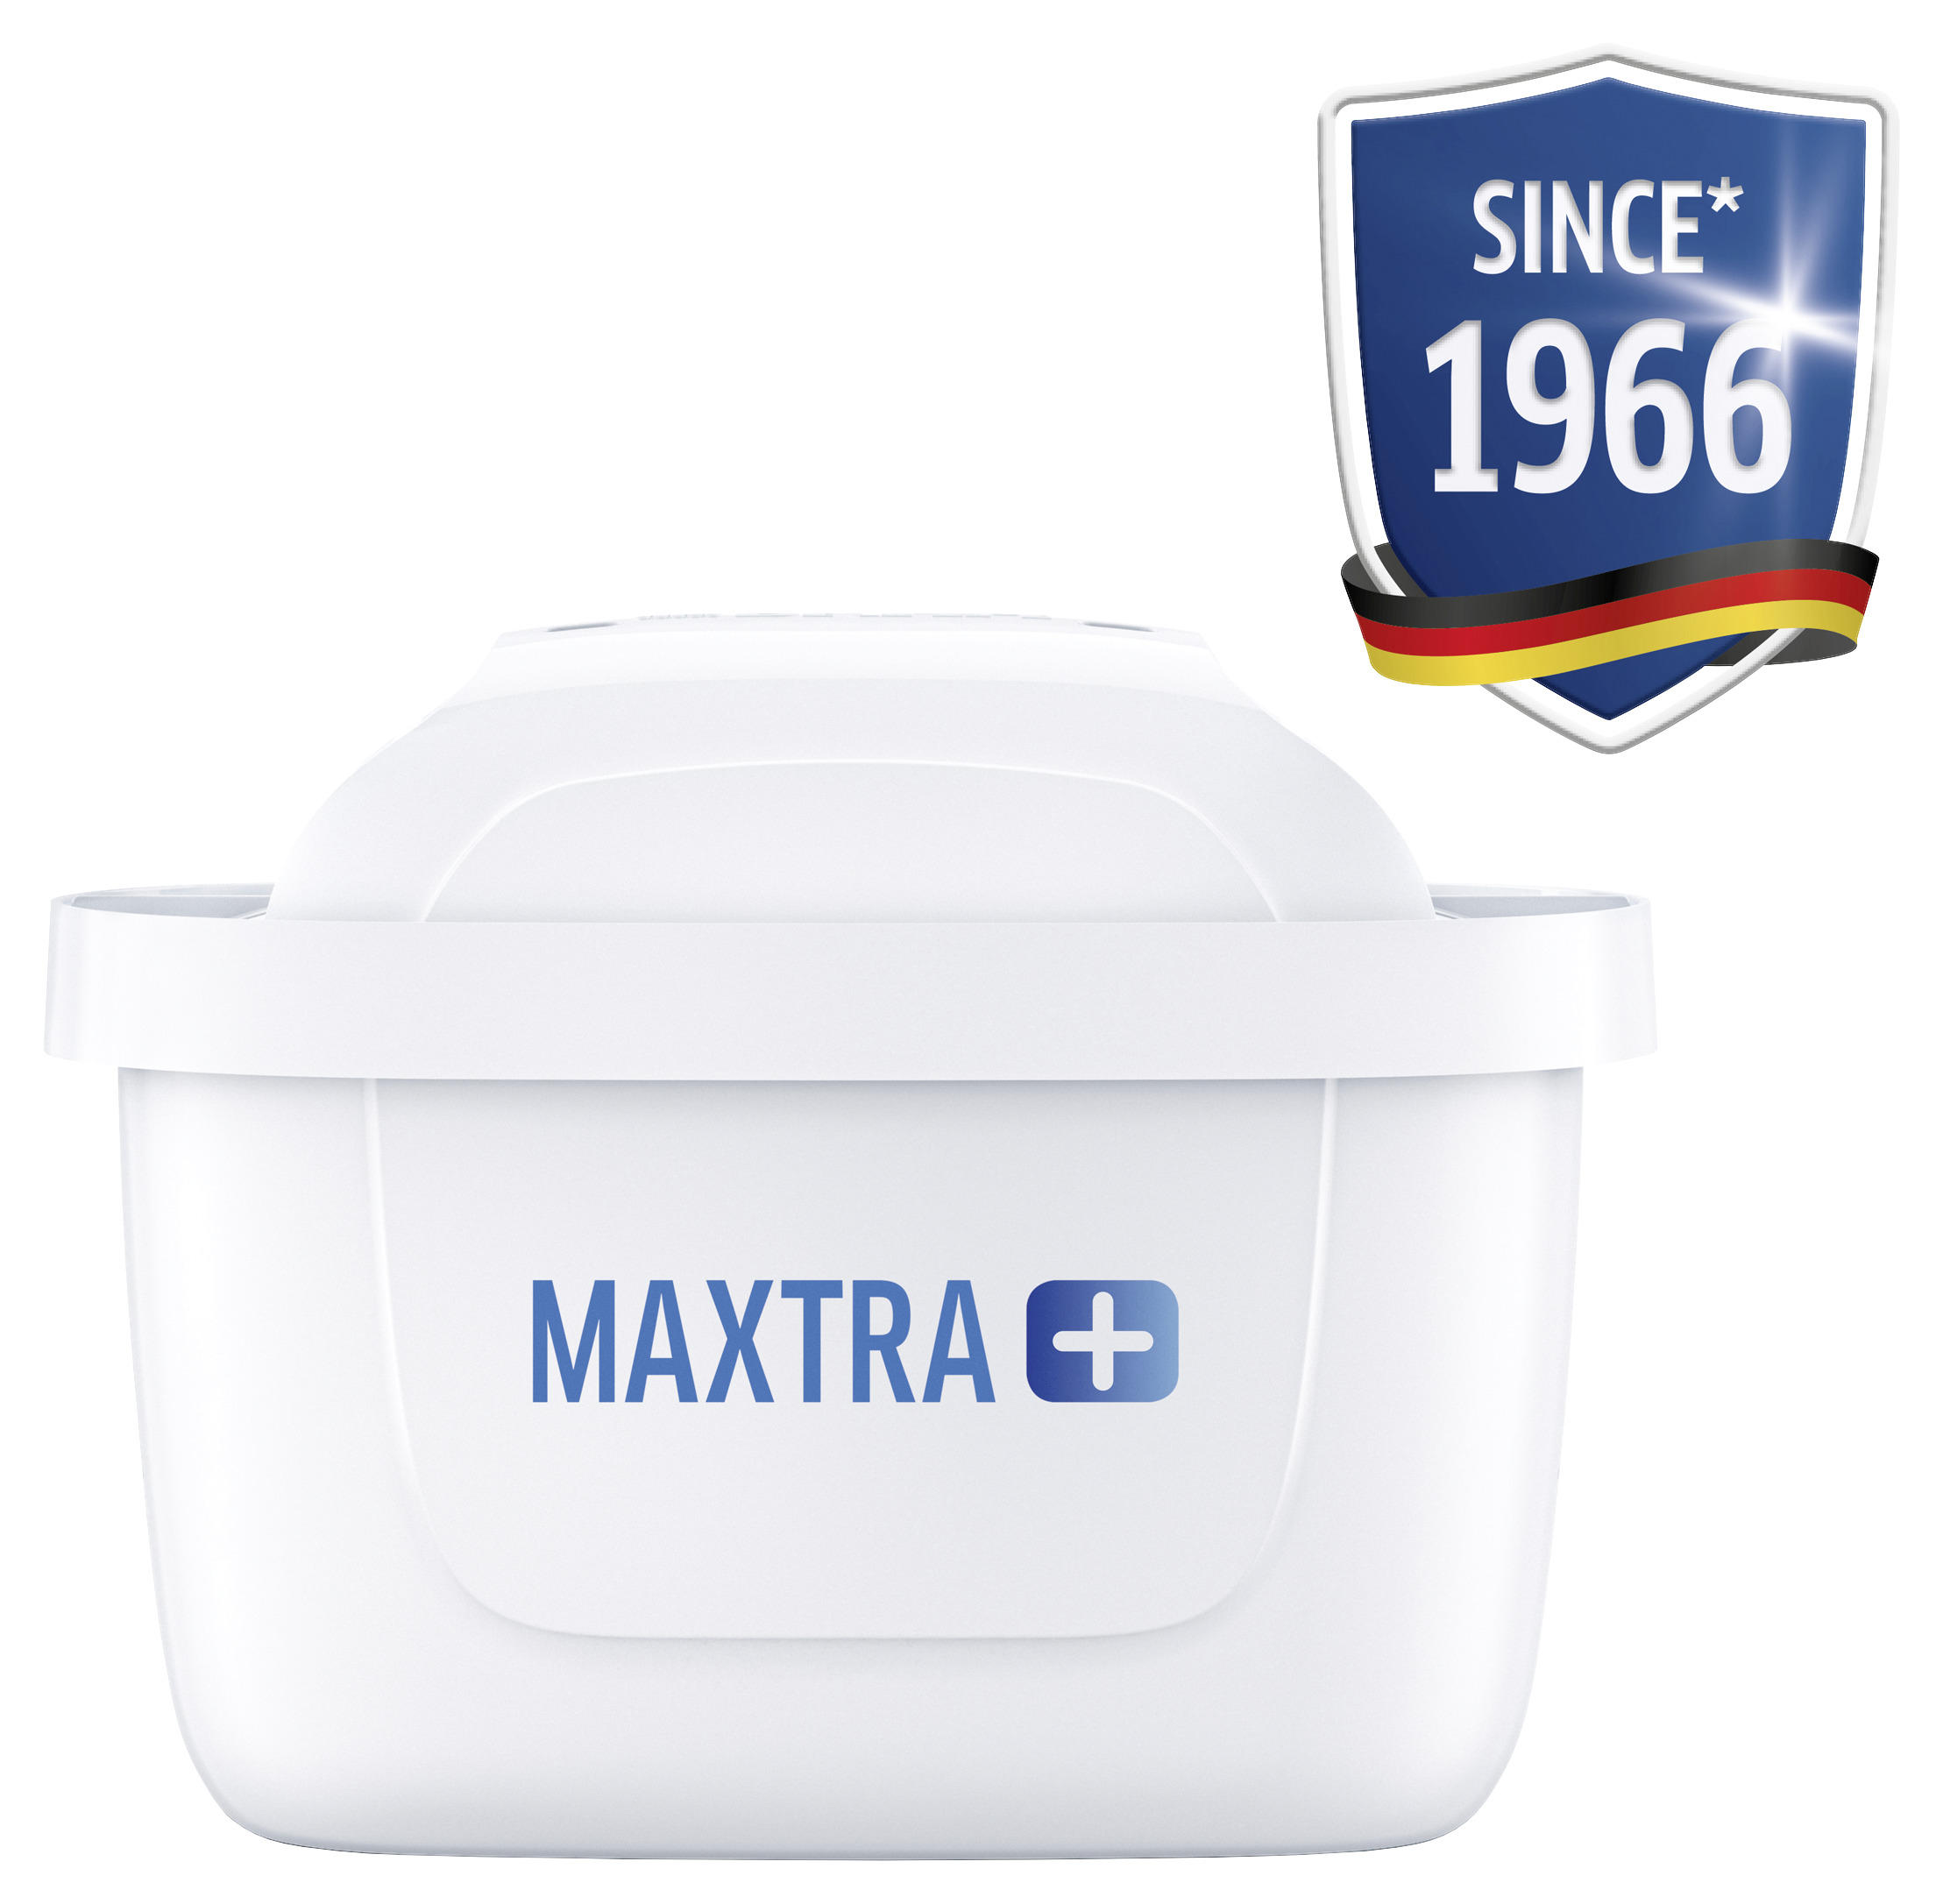 FILTERKARTUSCHE  MAXTRA+ 4er Pack  - Weiß, Basics, Kunststoff (400l) - Brita